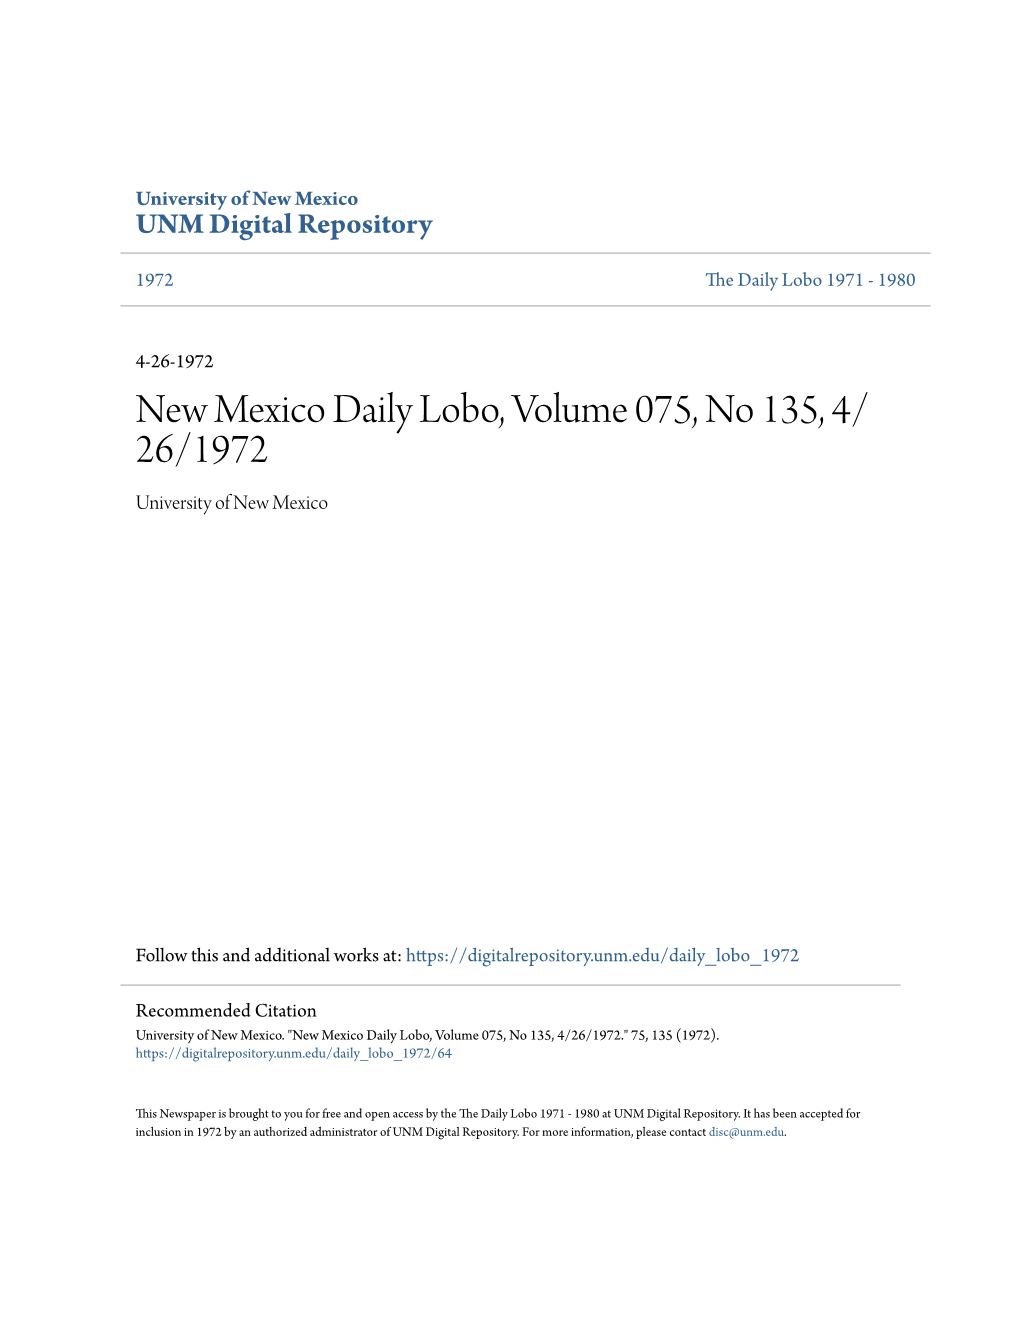 New Mexico Daily Lobo, Volume 075, No 135, 4/26/1972." 75, 135 (1972)